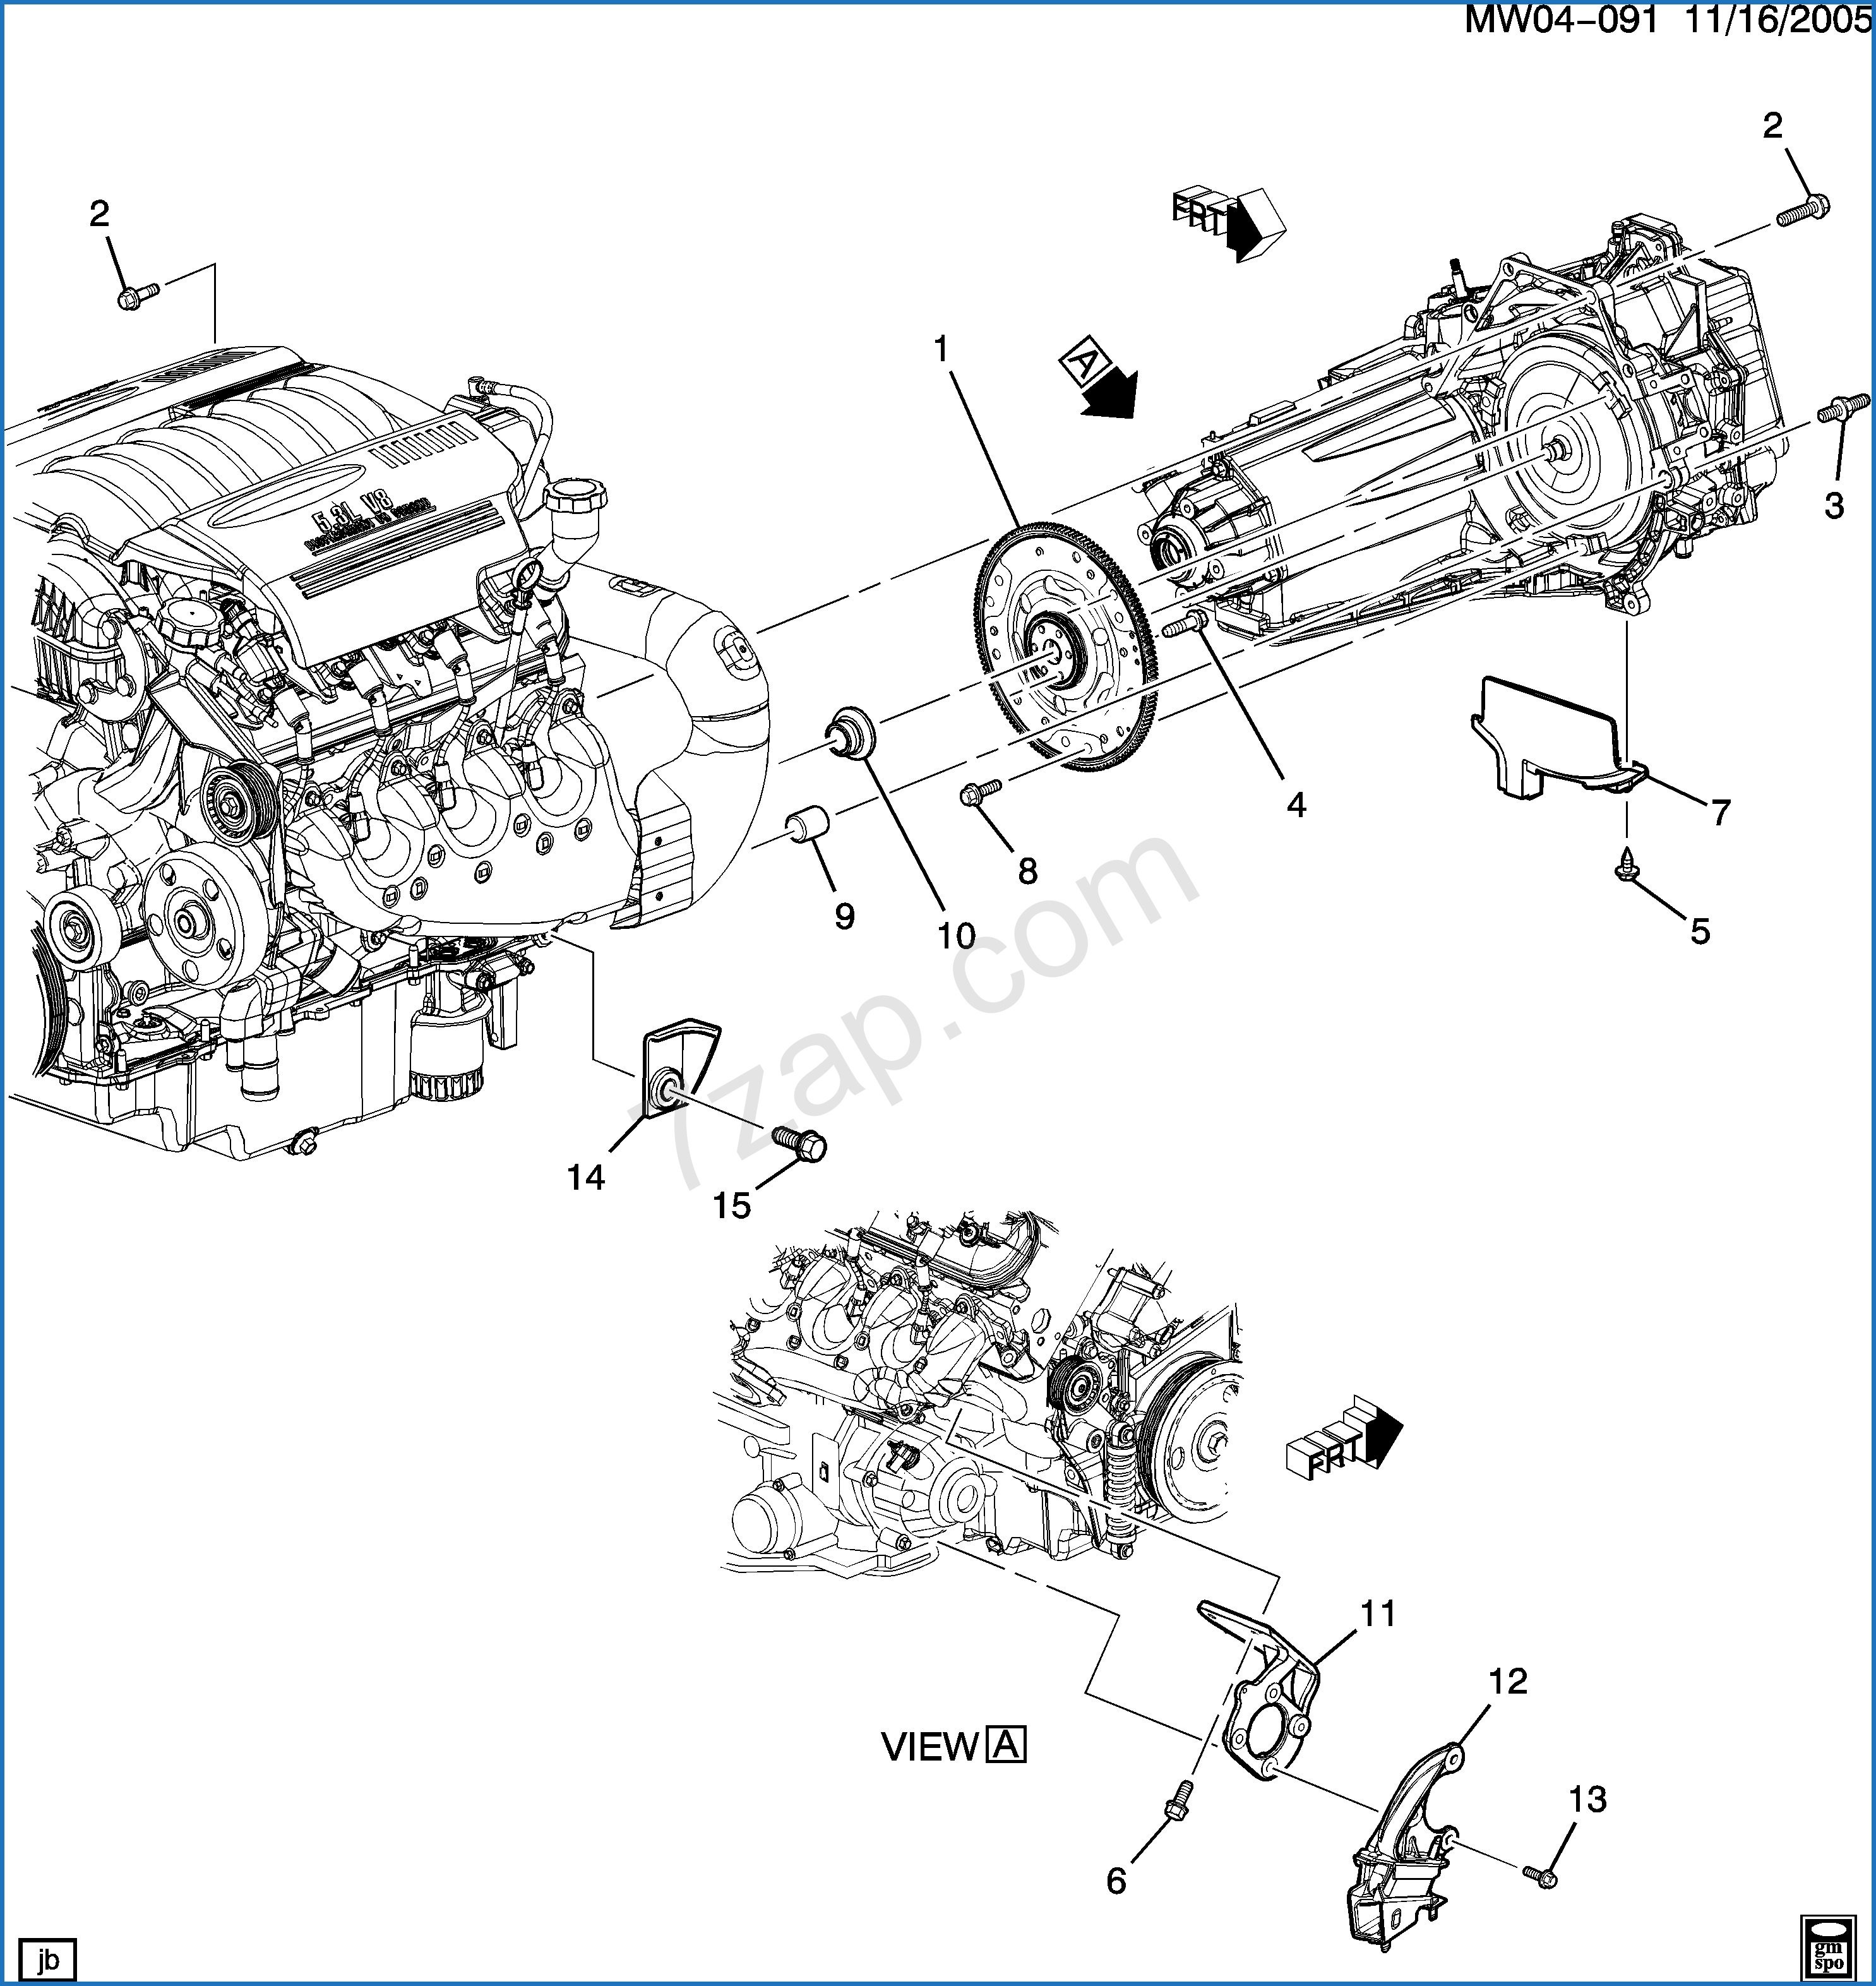 Auto Transmission Diagram toyota Parts Catalog Beautiful Chevrolet Auto Parts Catalog Of Auto Transmission Diagram